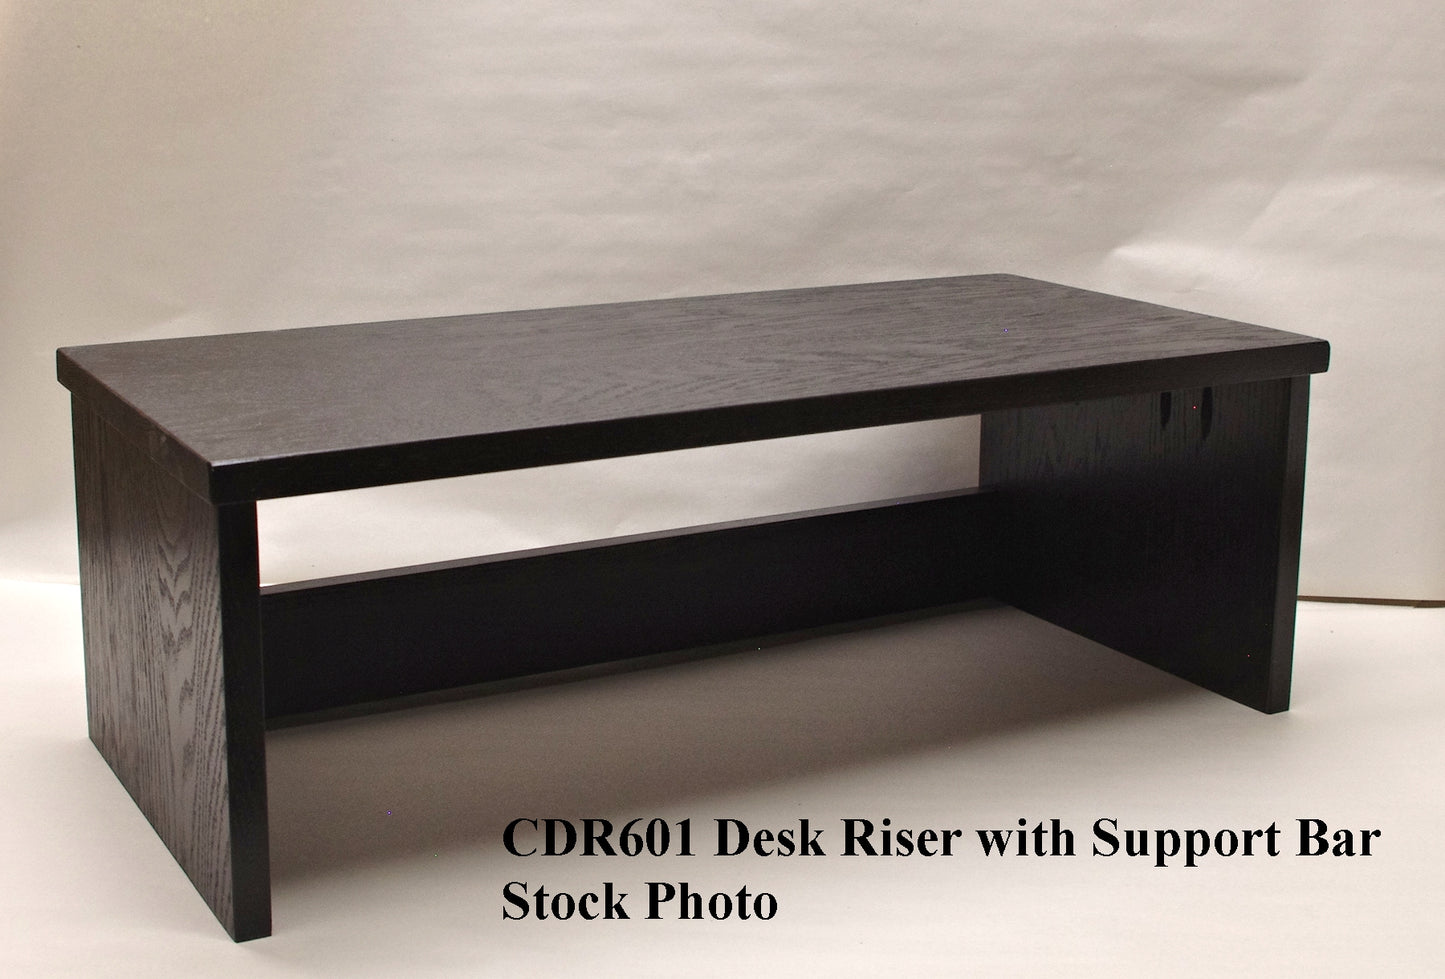 CDR601 Desk Riser with Support Bar - 38" Length